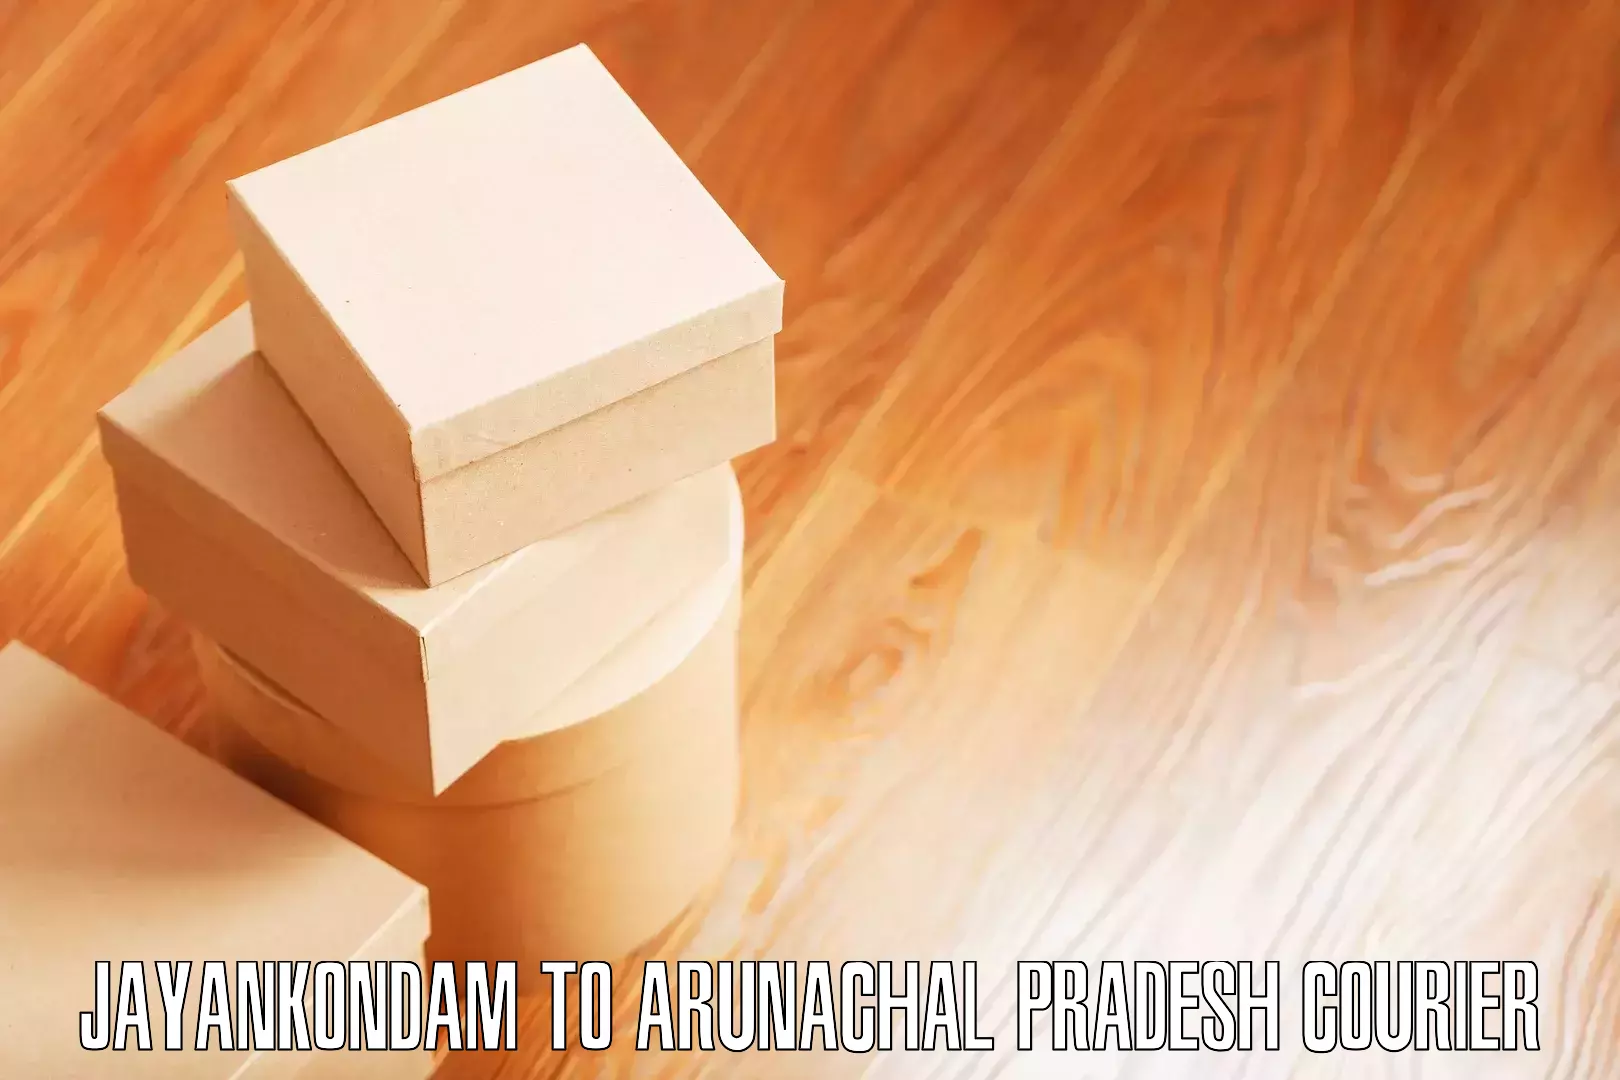 Professional furniture movers Jayankondam to Itanagar